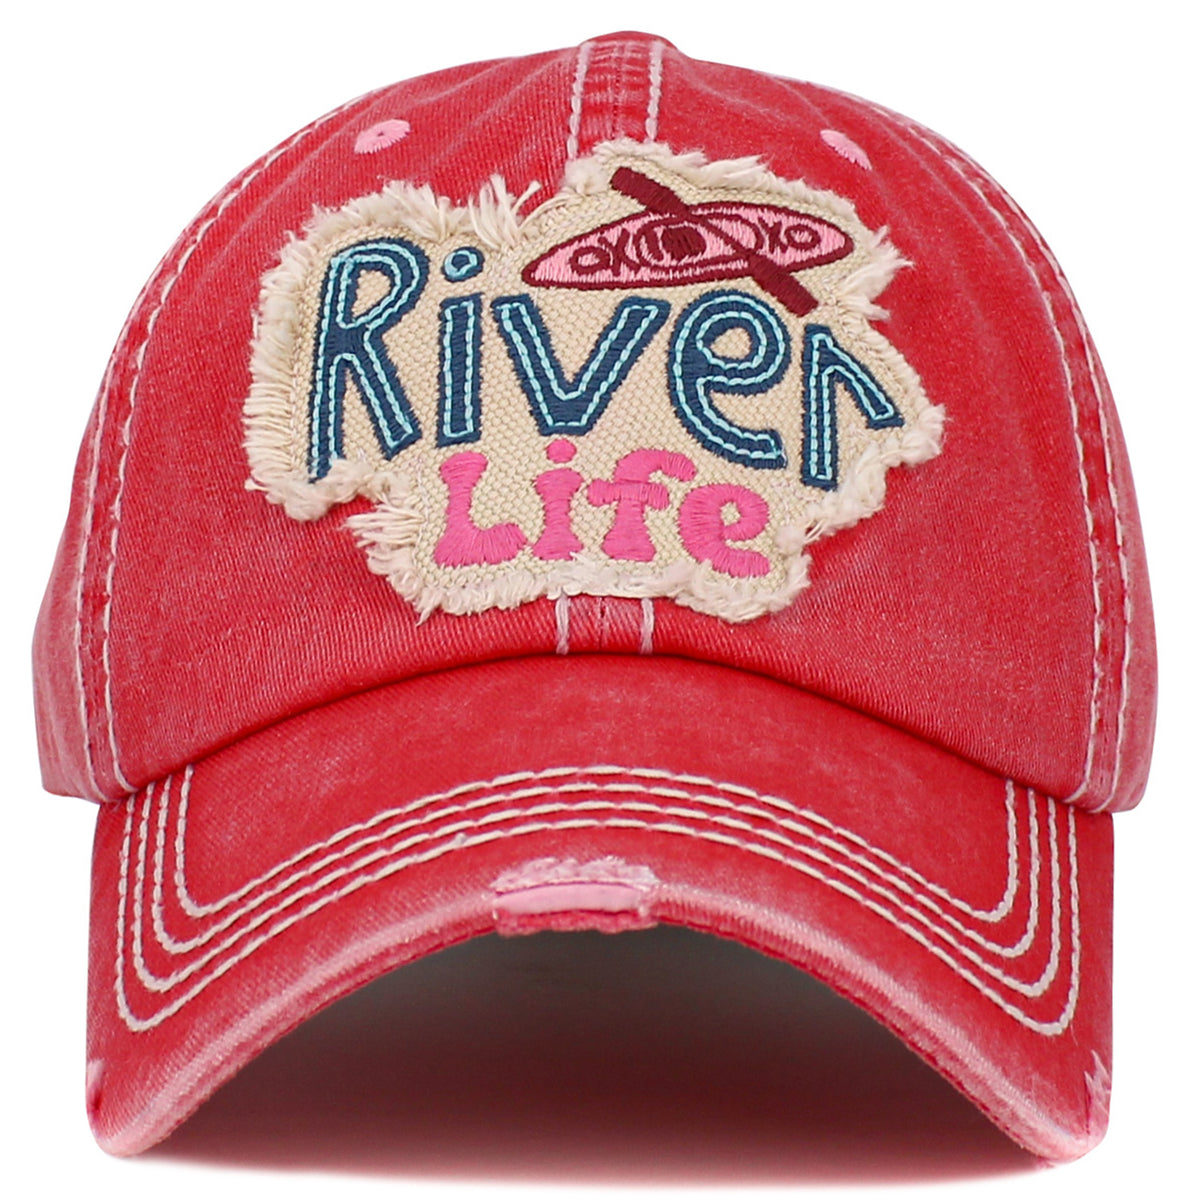 1532 - River Life Hat - Hot Pink